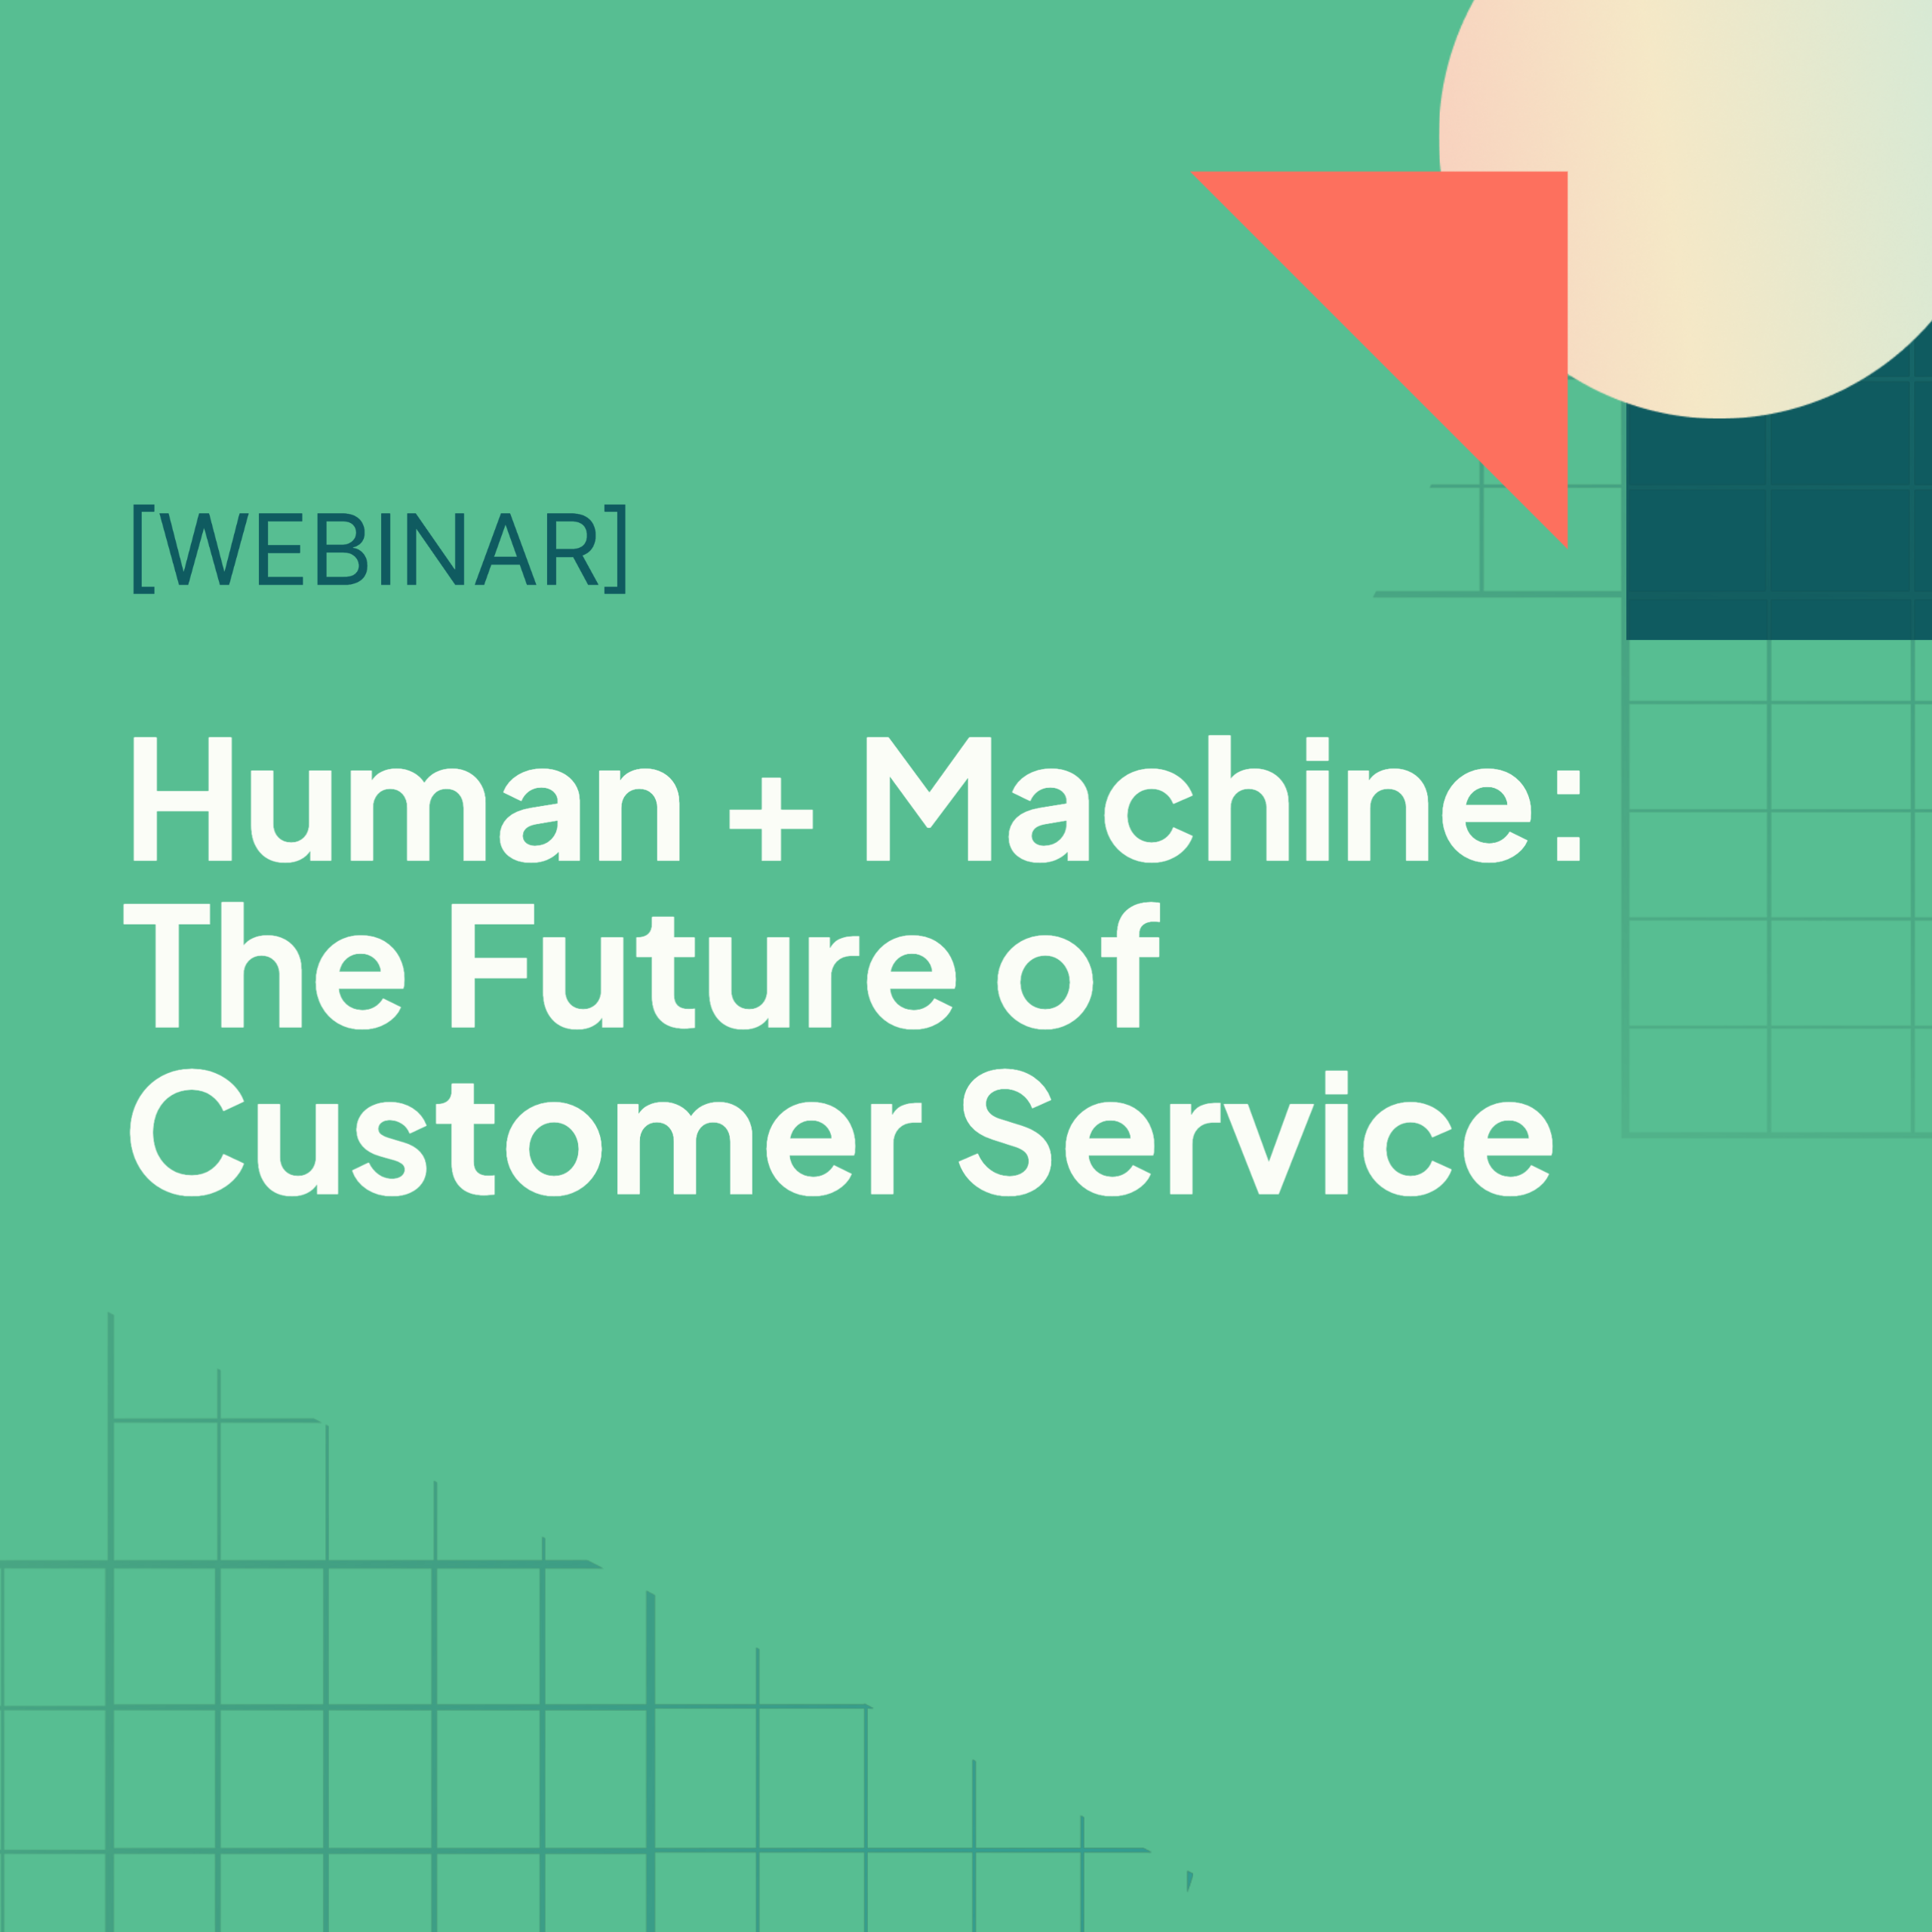 The future of customer service is human plus machine.